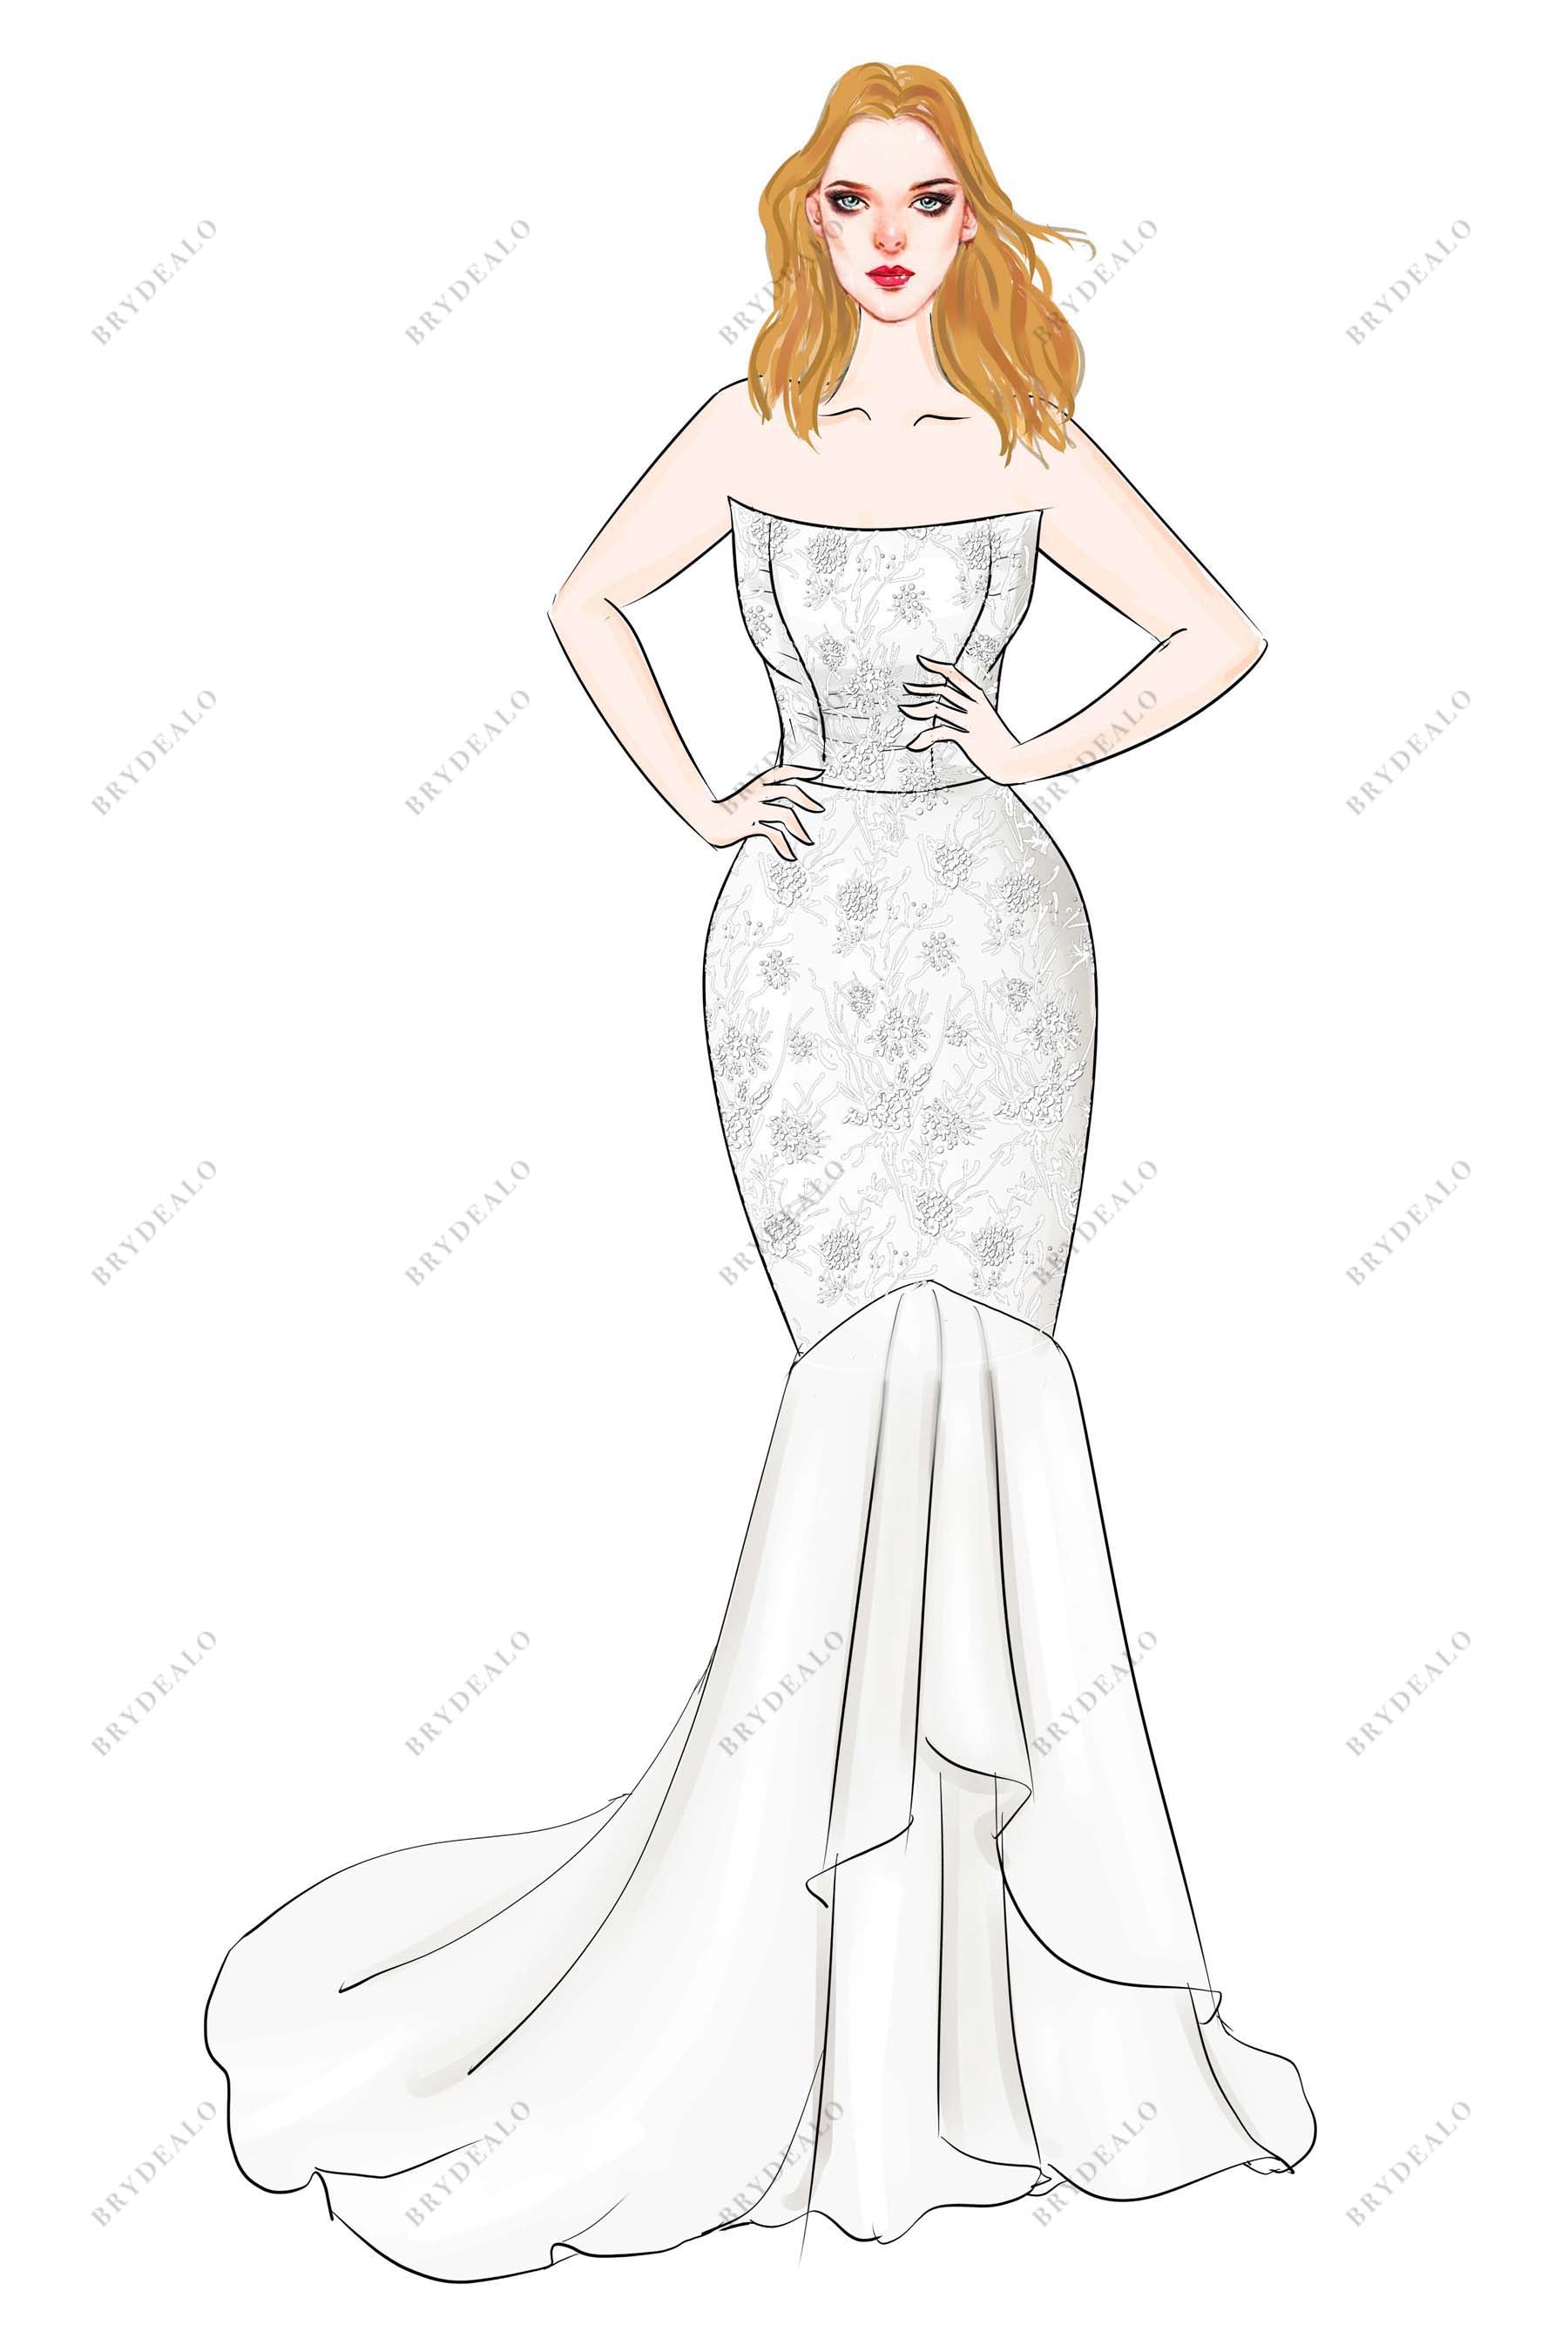 mermaid style wedding dresses drawing - Google Search | Desenhos de moda,  Designer de moda, Ilustrações de moda